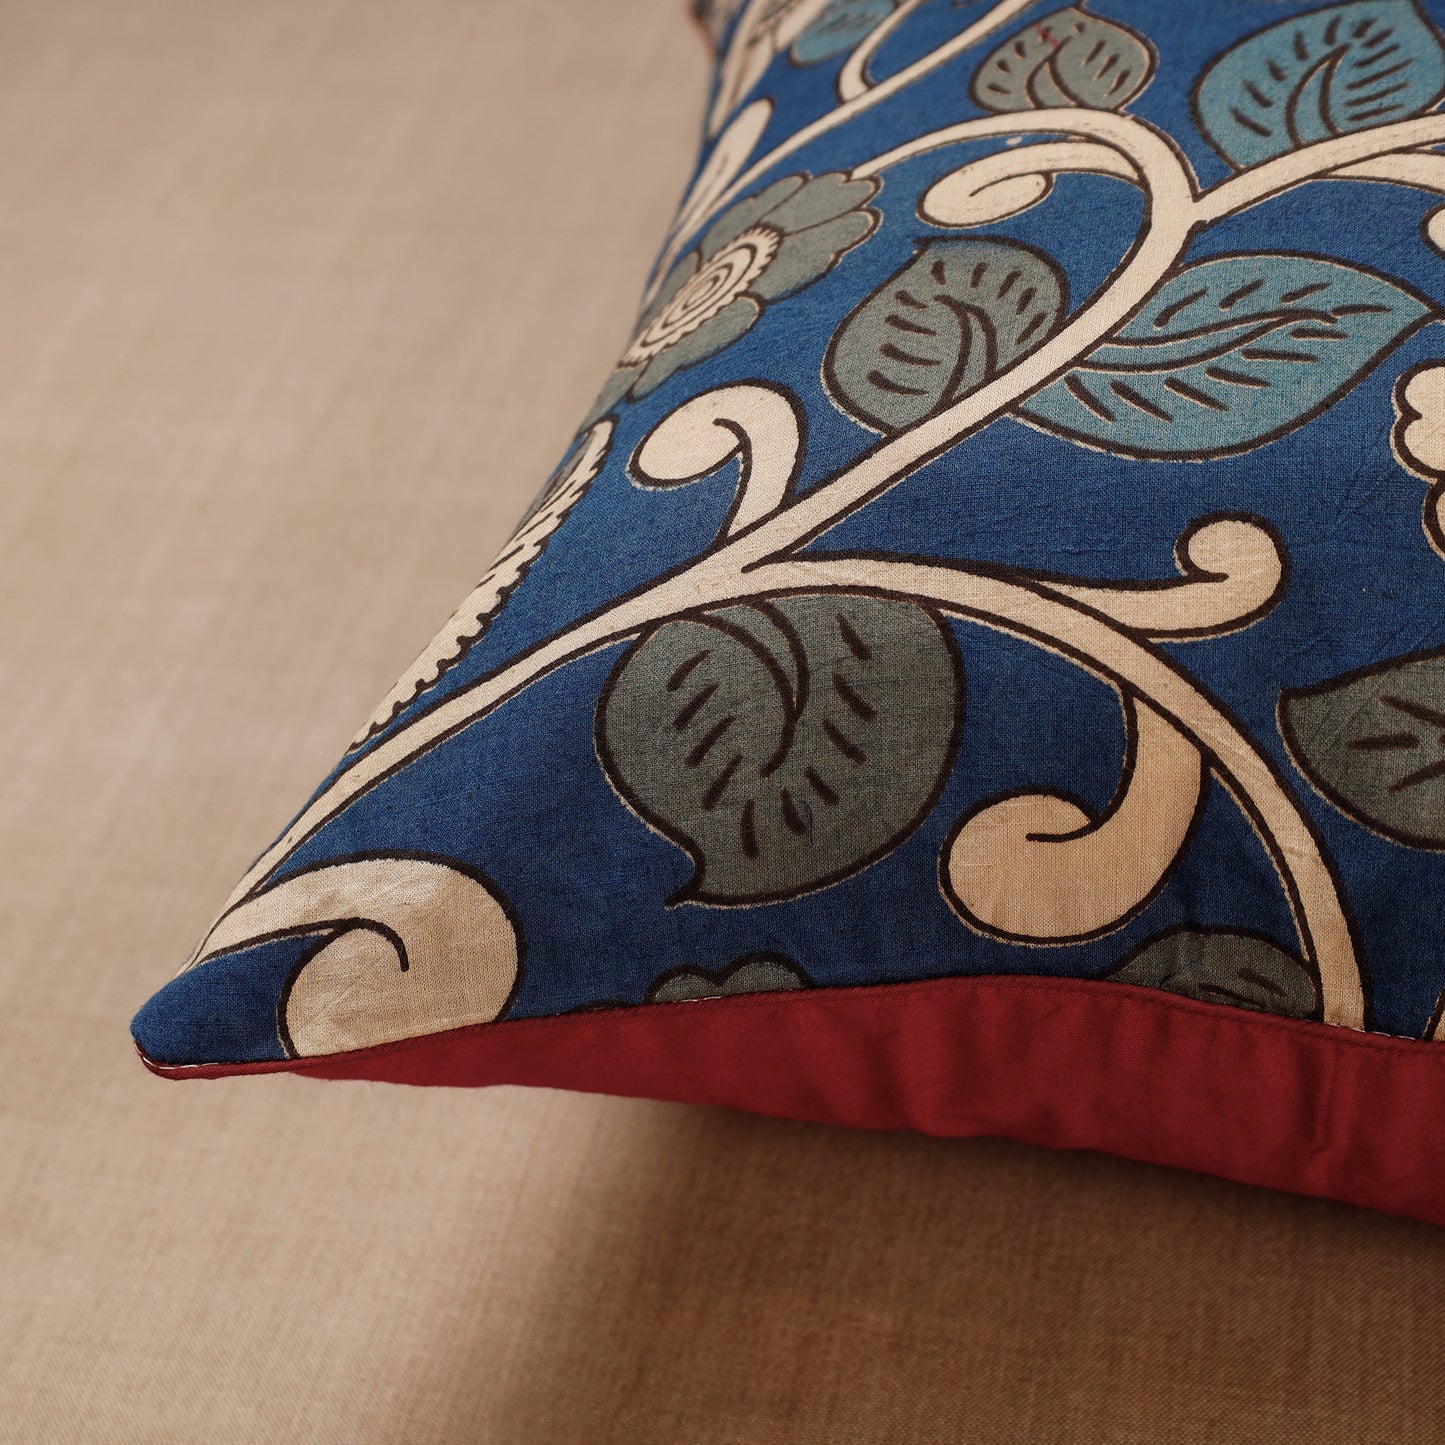 Blue - Kalamkari Block Printed Cotton Cushion Cover (16 x 16 in)